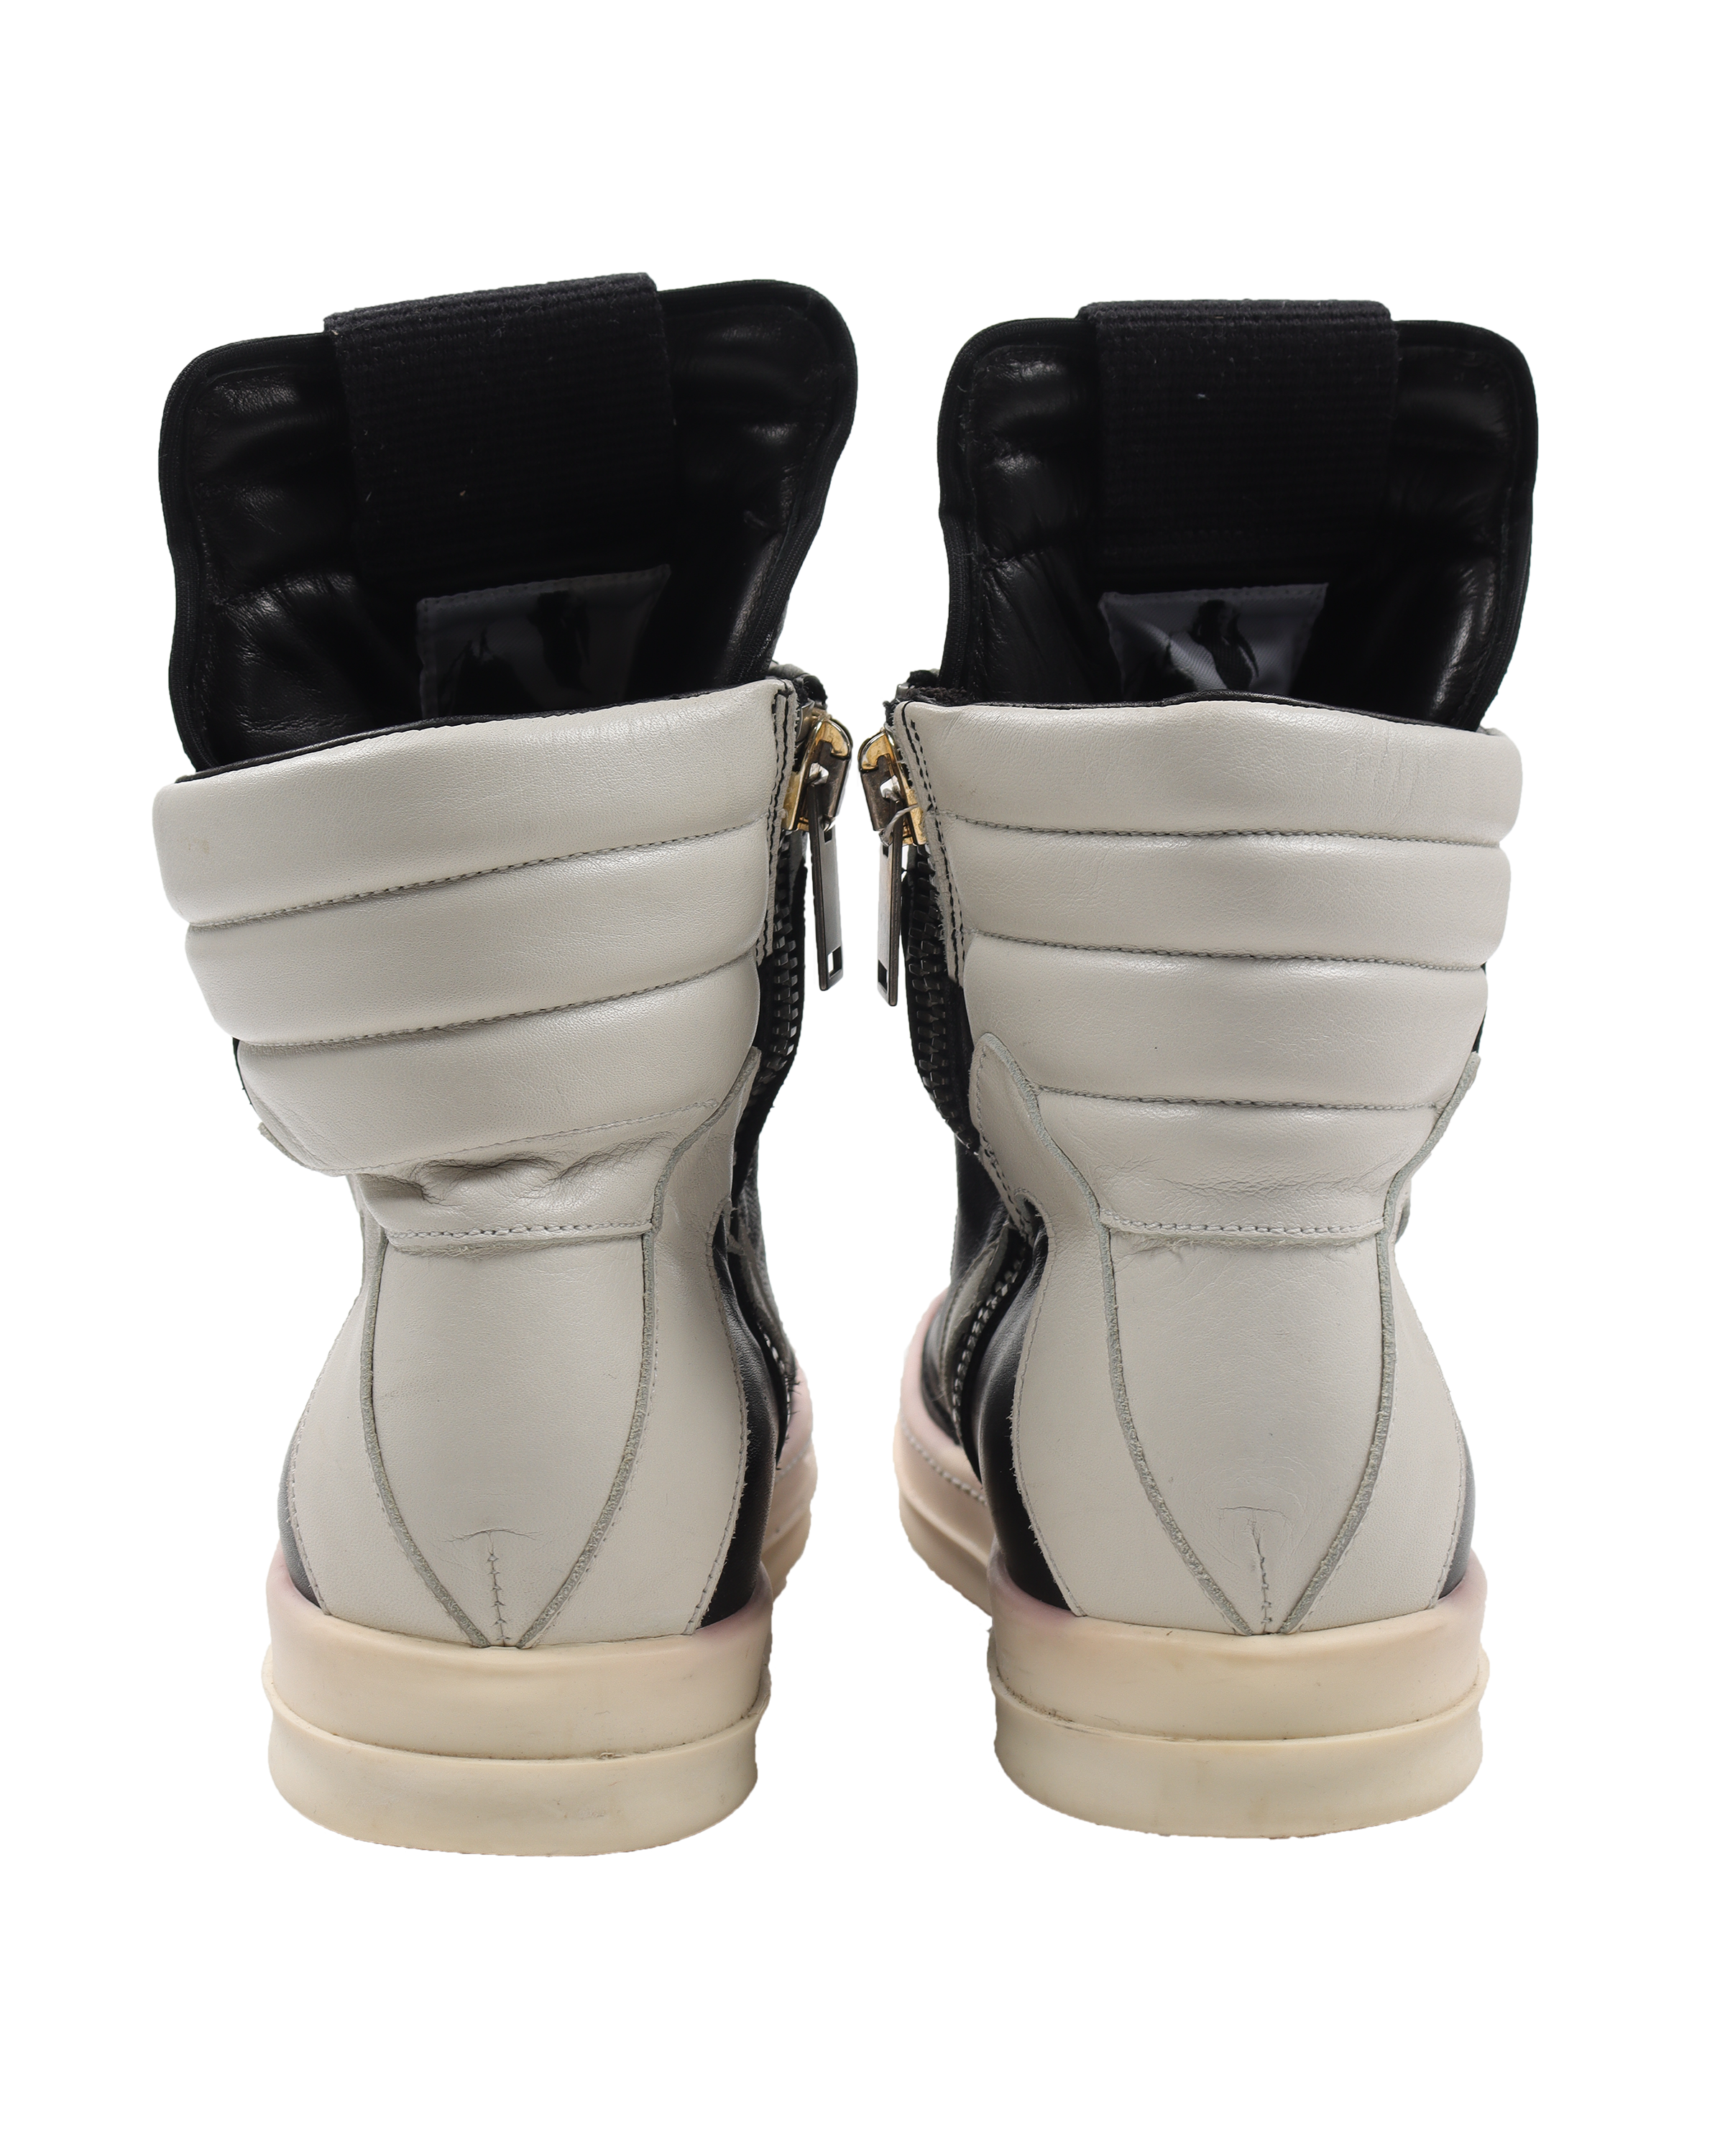 Black & Off-White Geobasket High Sneakers